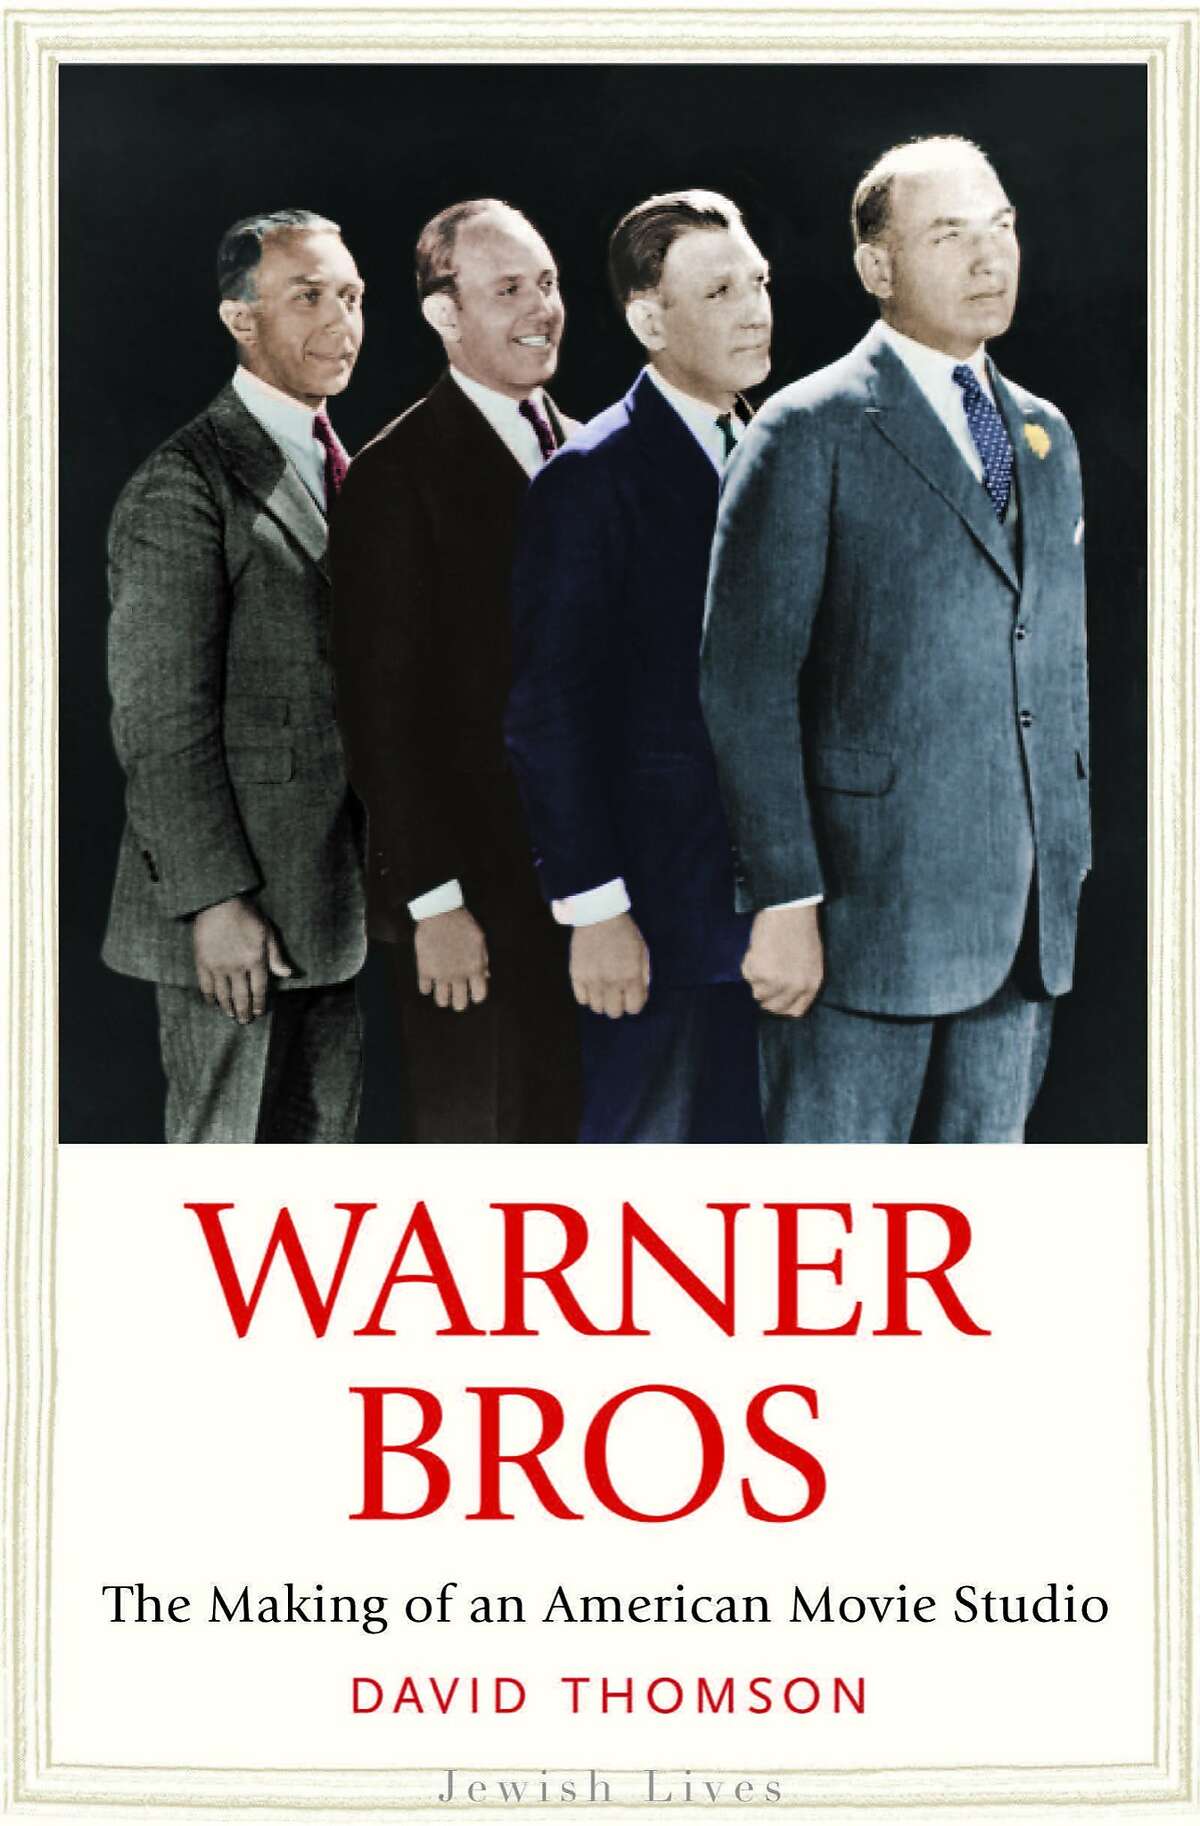 "Warner Bros"